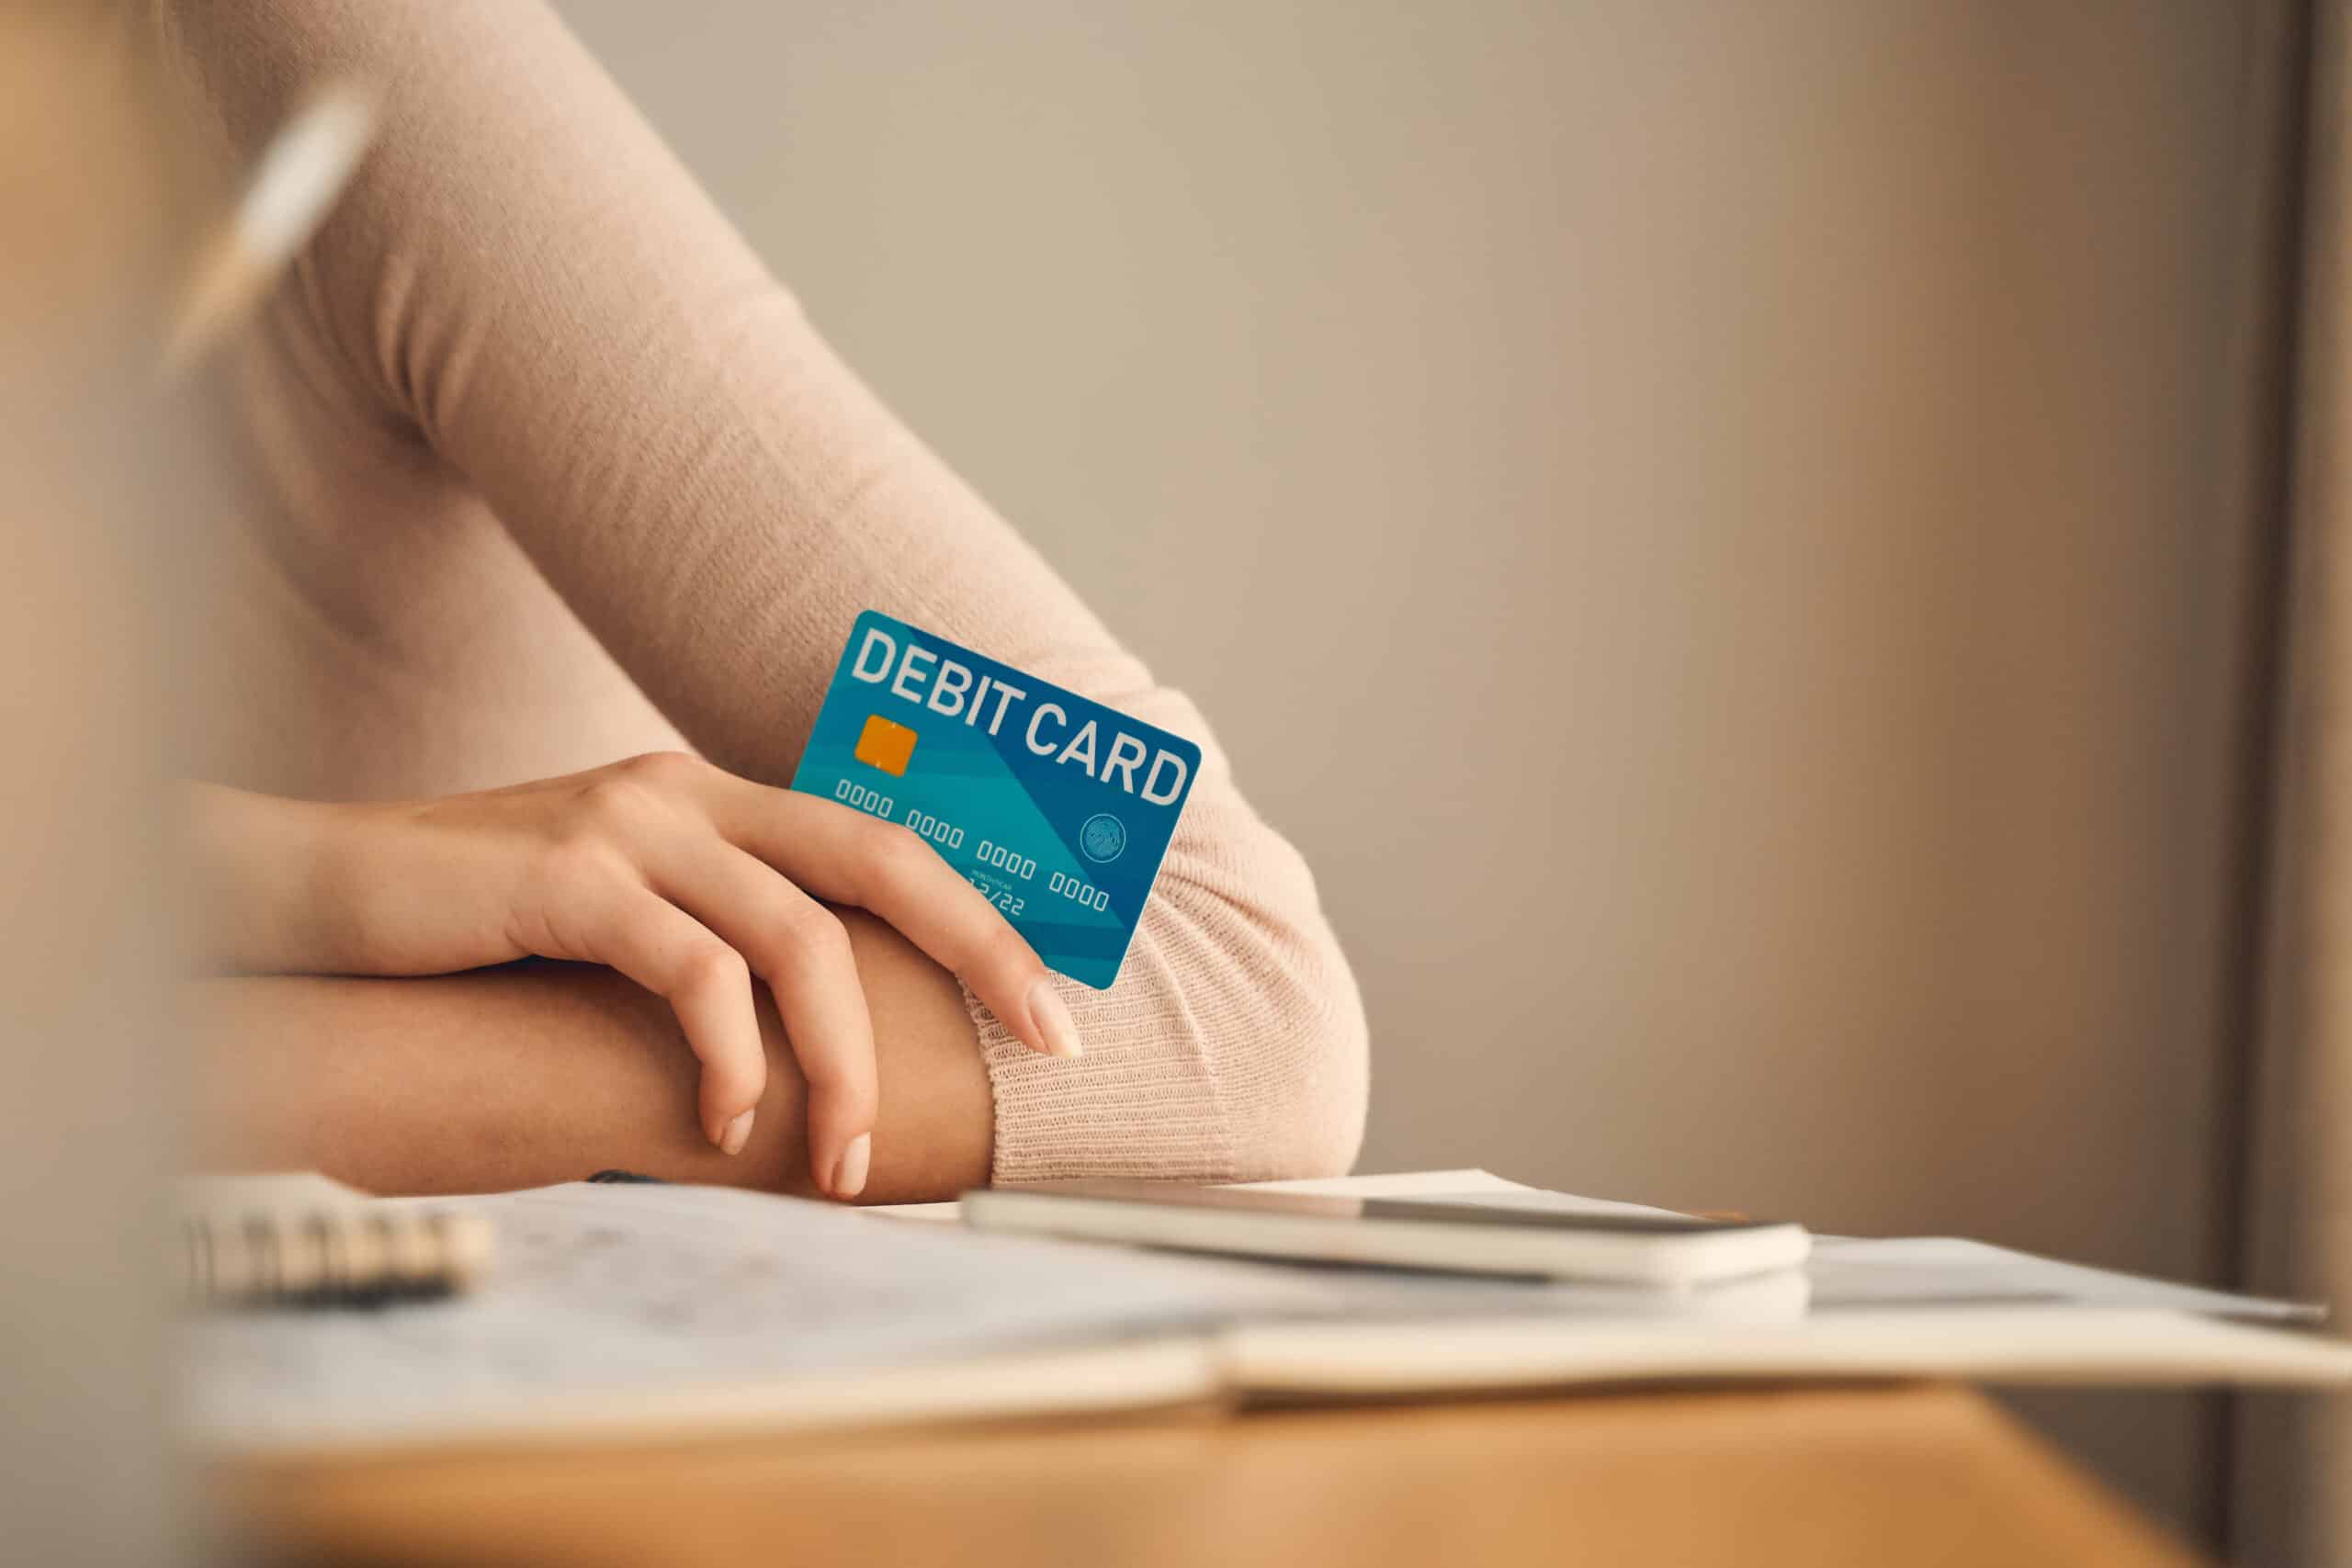 Can You Get A Cash Advance Using a Debit Card?